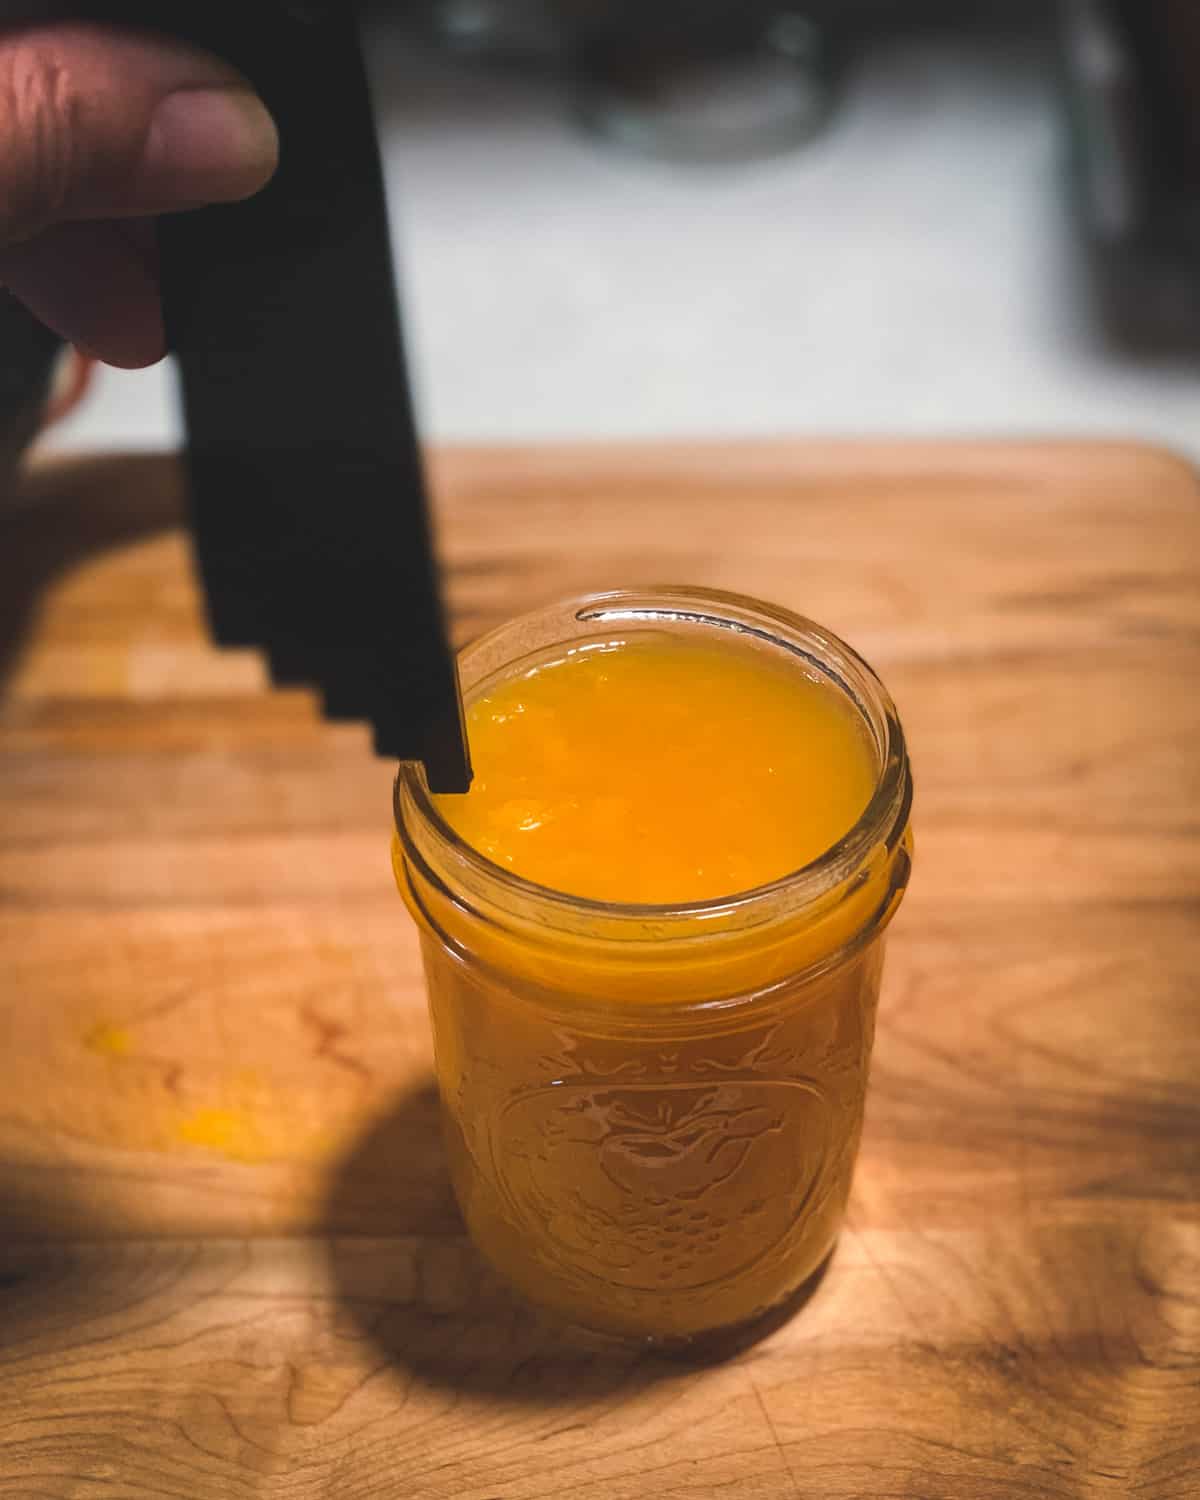 measuring the head space on the jar of peach jam